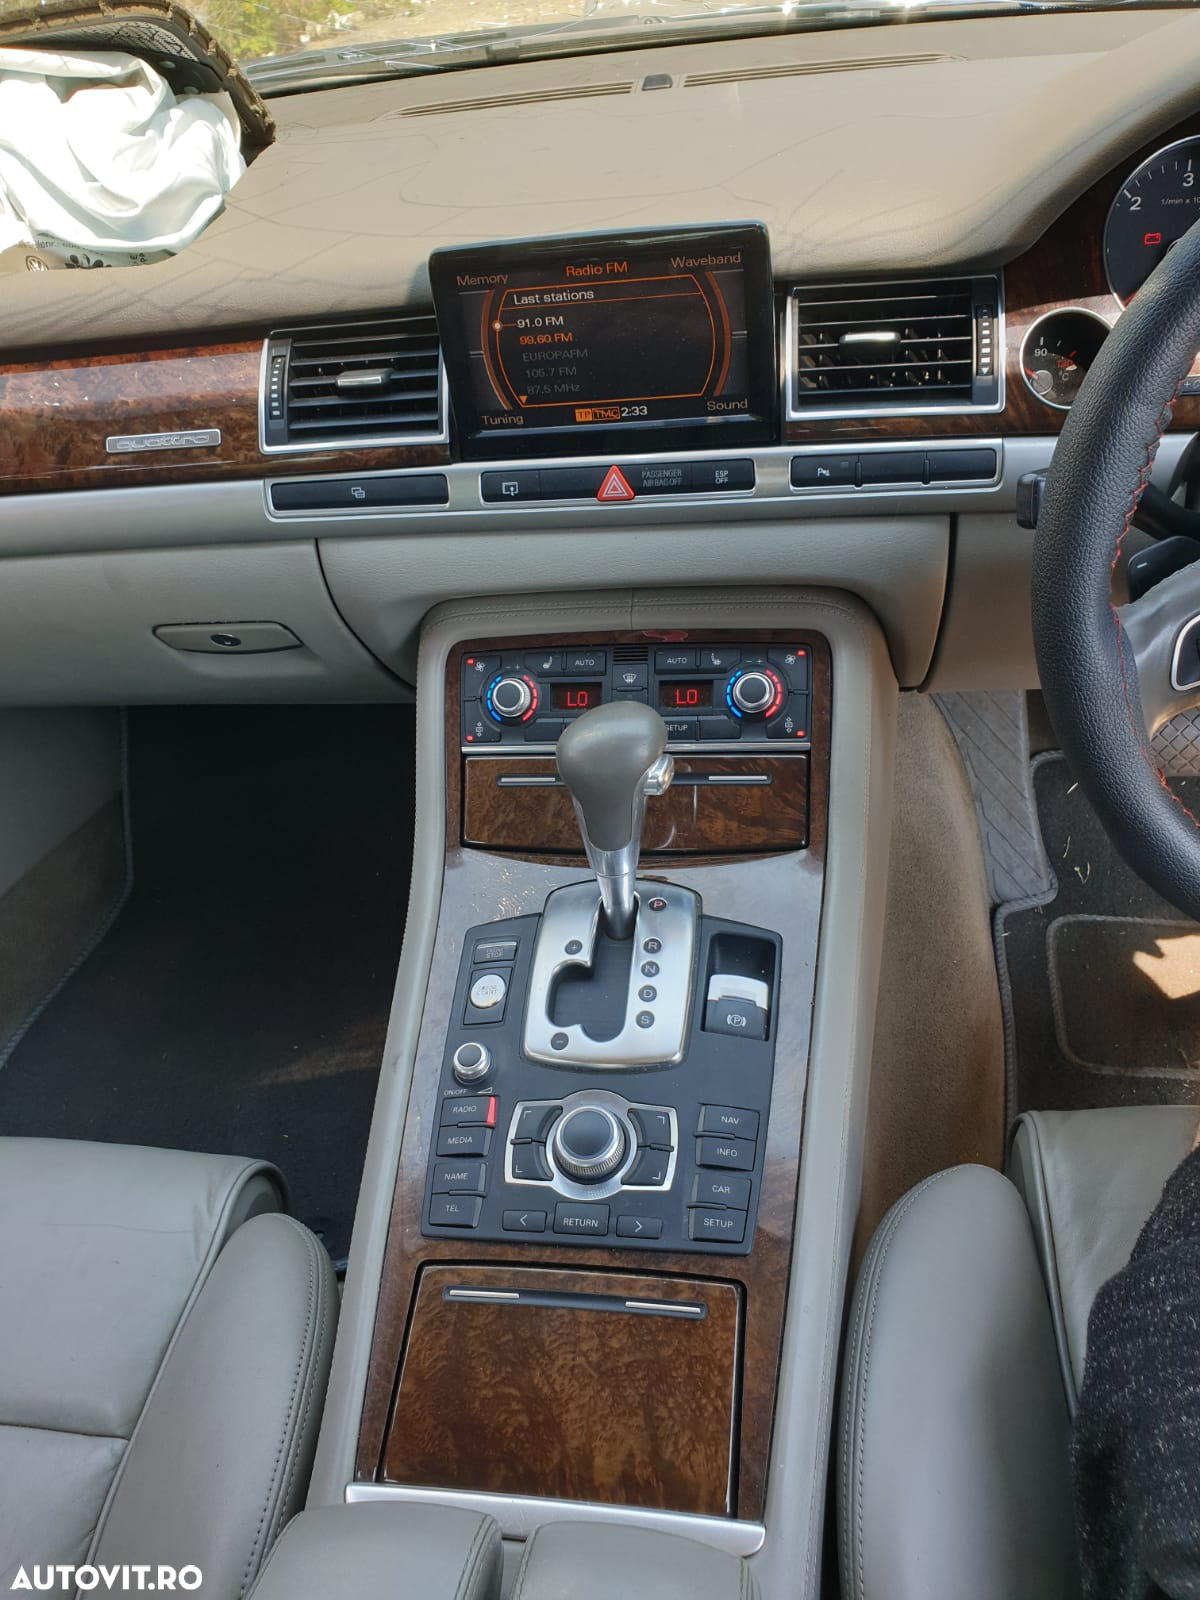 Sistem Audio BOSSE Audi A8 S-Line Complet - 4